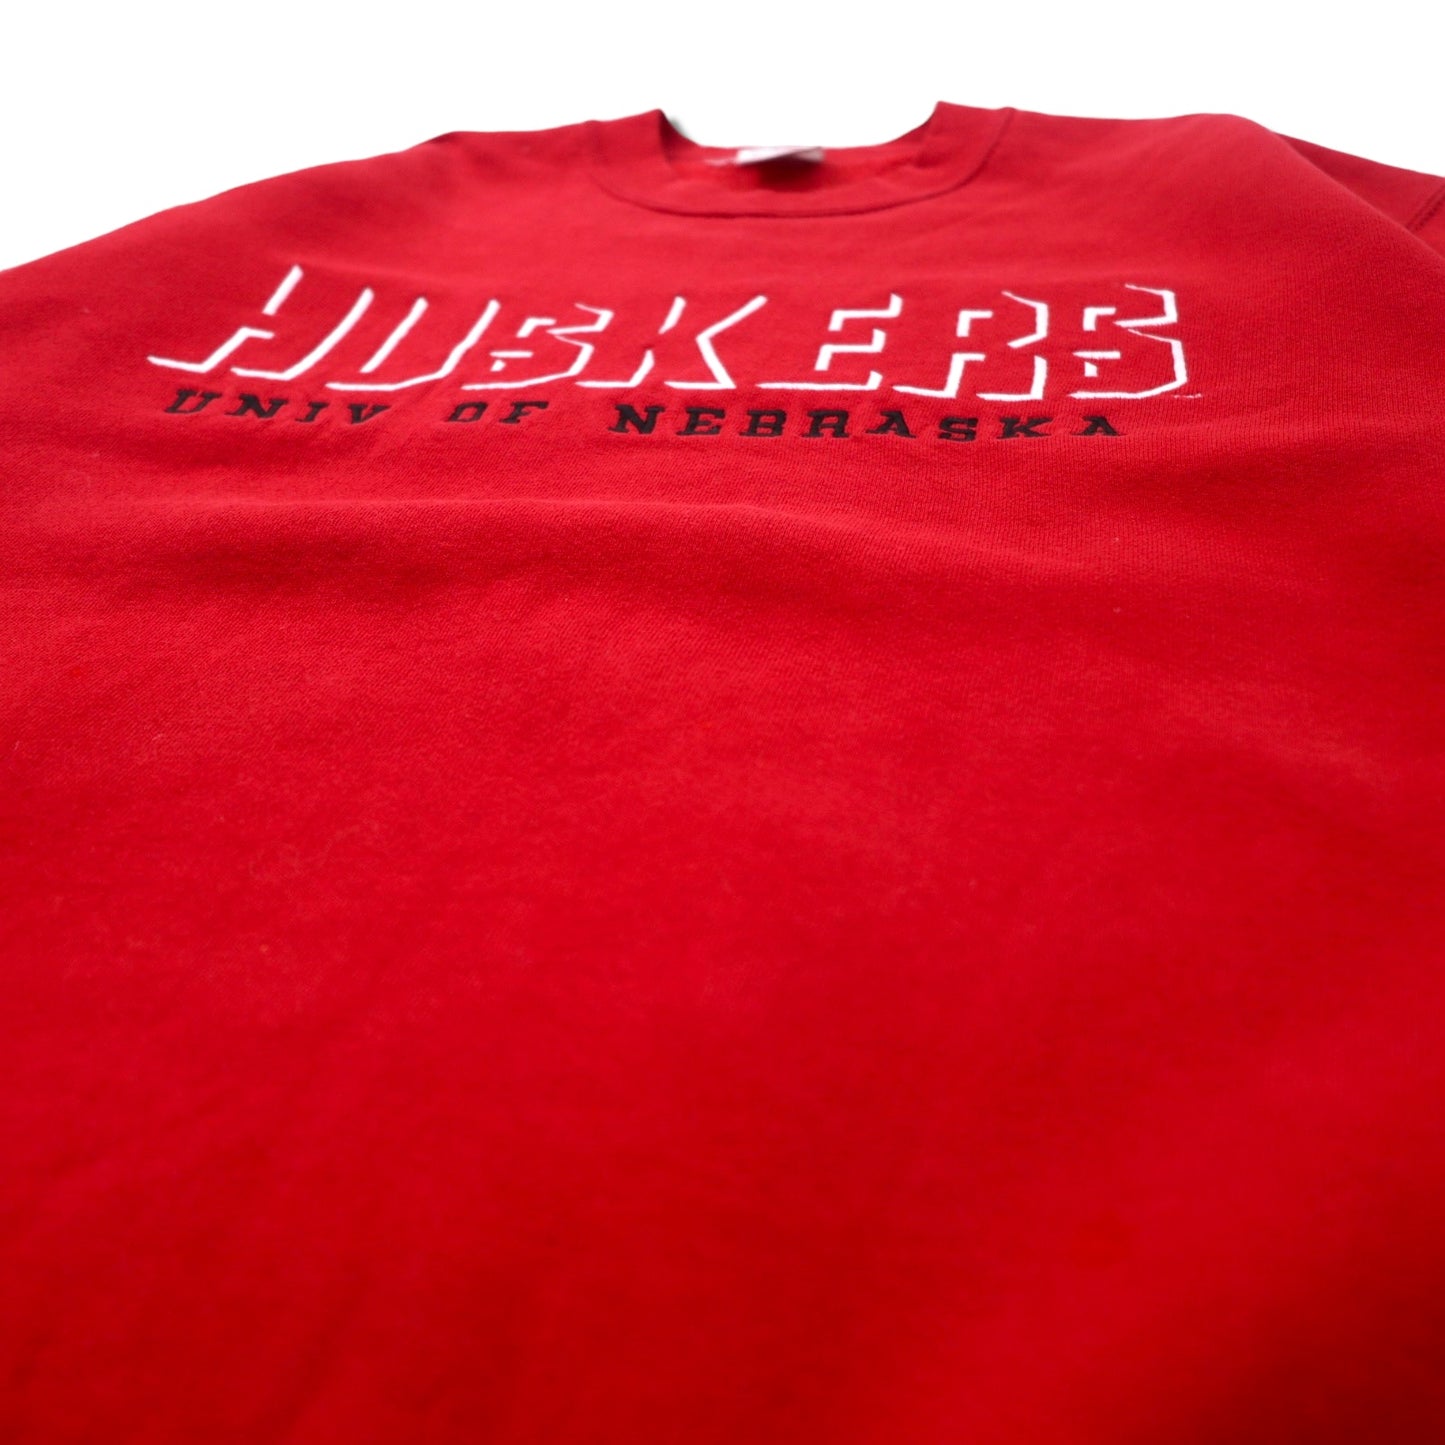 College House USA製 90年代 カレッジ刺繍 スウェット L レッド コットン 裏起毛 フットボール HUSKERS UNIV OF NEBRASKA